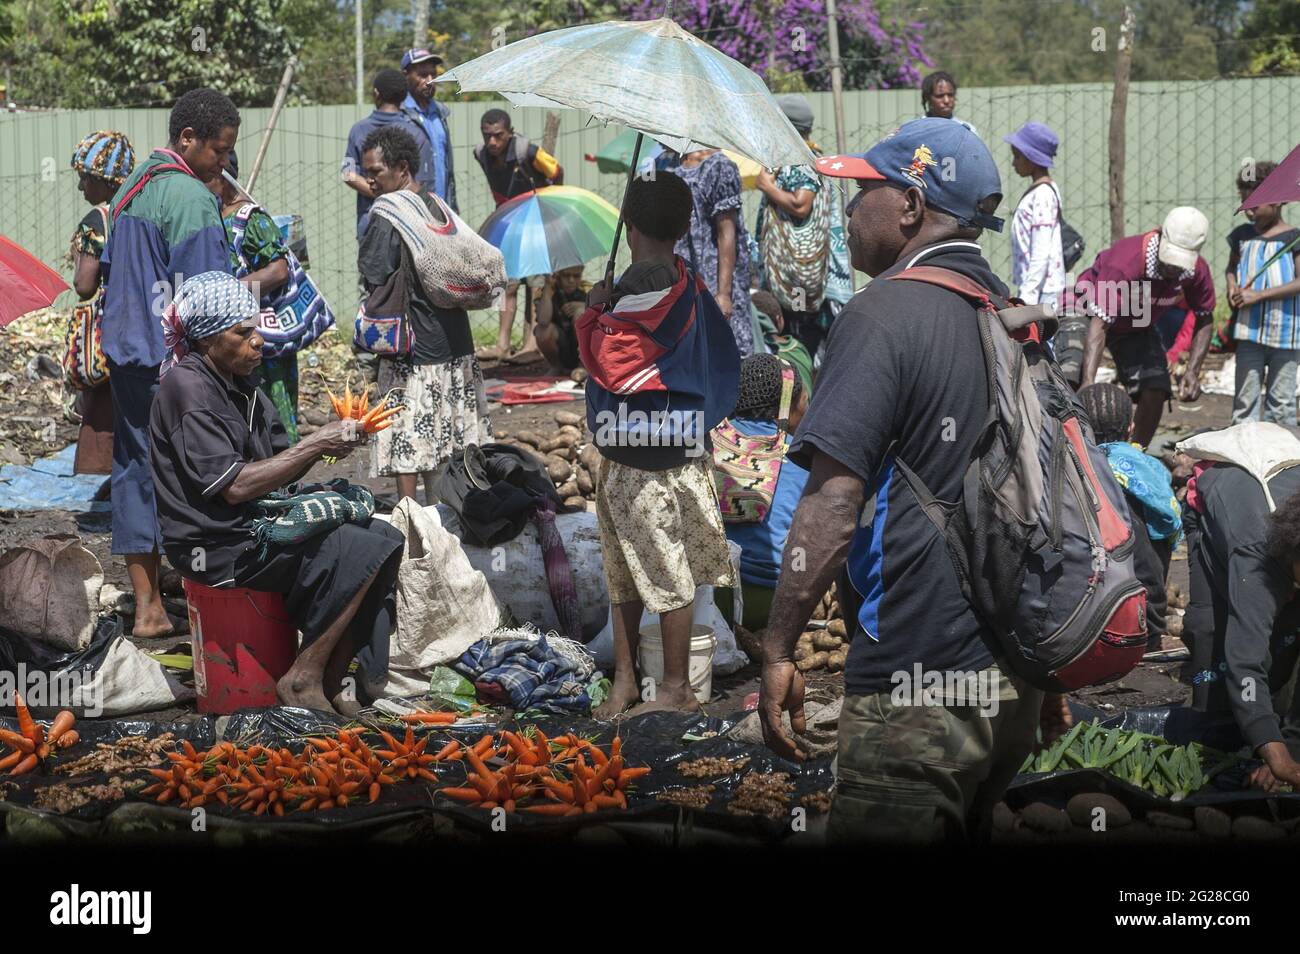 Papua New Guinea; Goroka; City marketplace. A city market full of people. Ein Stadtmarkt voller Menschen. Un mercado de la ciudad lleno de gente. 市場。 Stock Photo